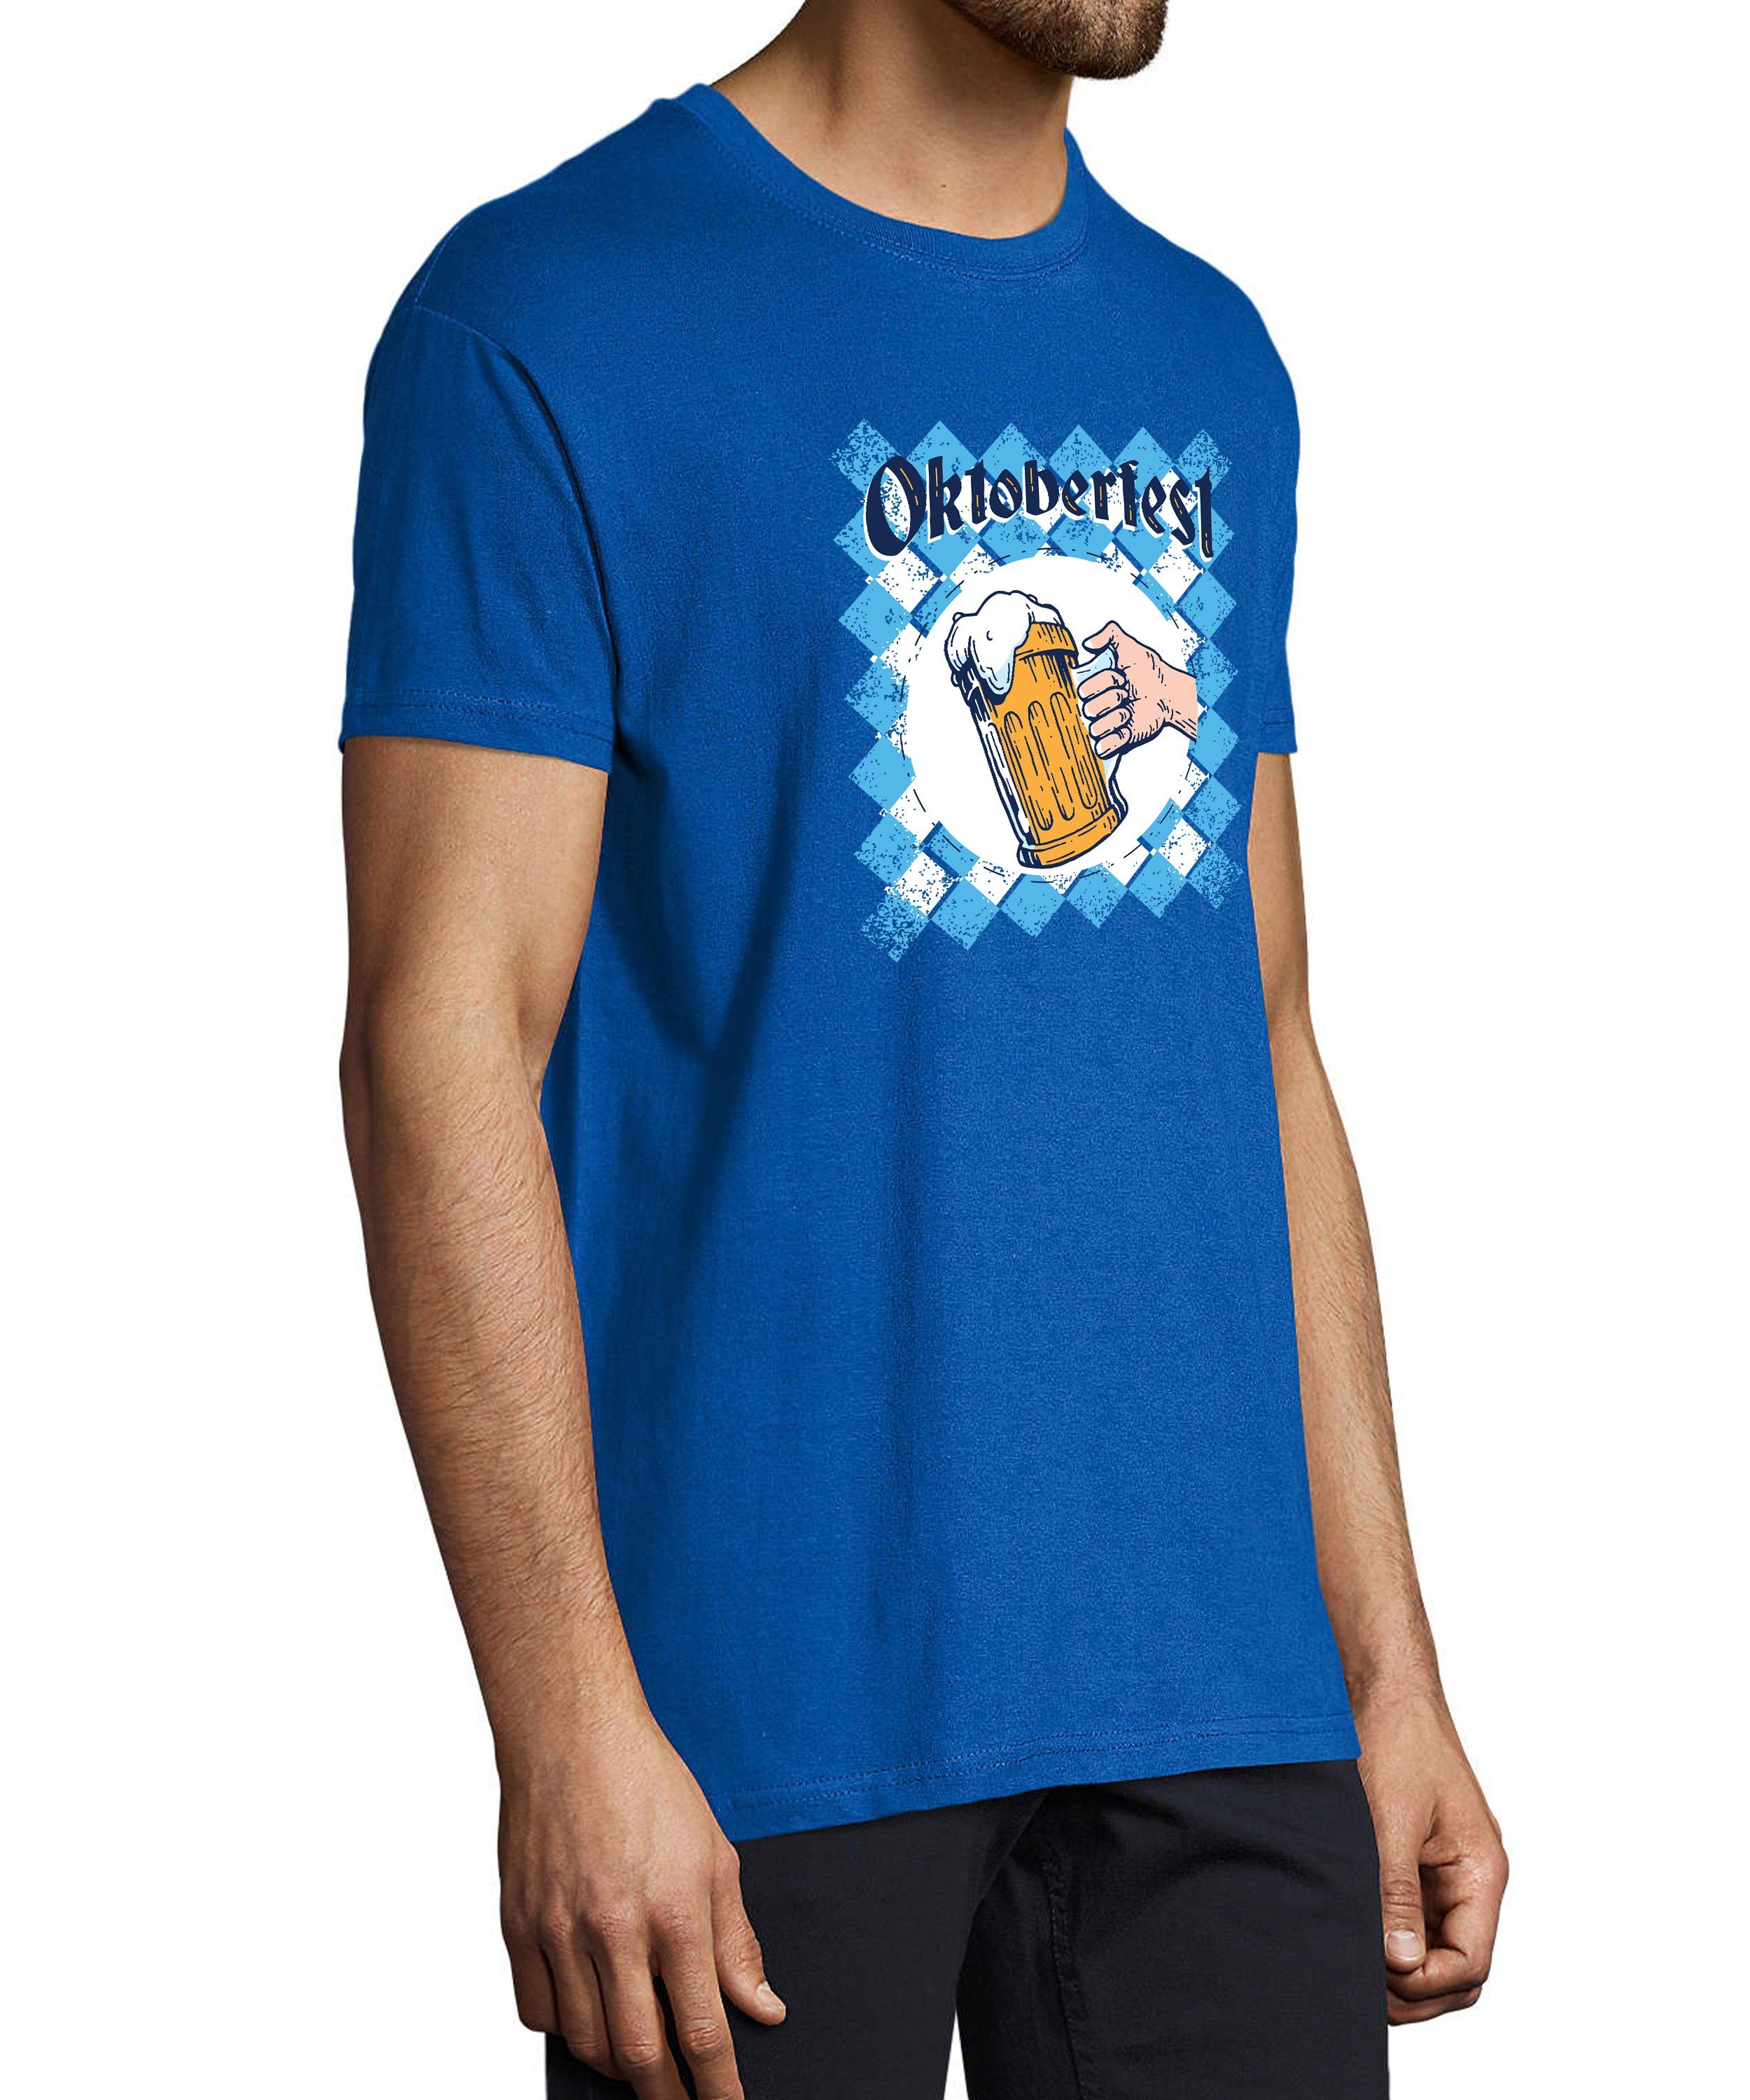 T-Shirt Trinkshirt Fit, Shirt mit T-Shirt MyDesign24 blau royal Regular Herren Baumwollshirt Aufdruck Bierglas Print Oktoberfest - i319